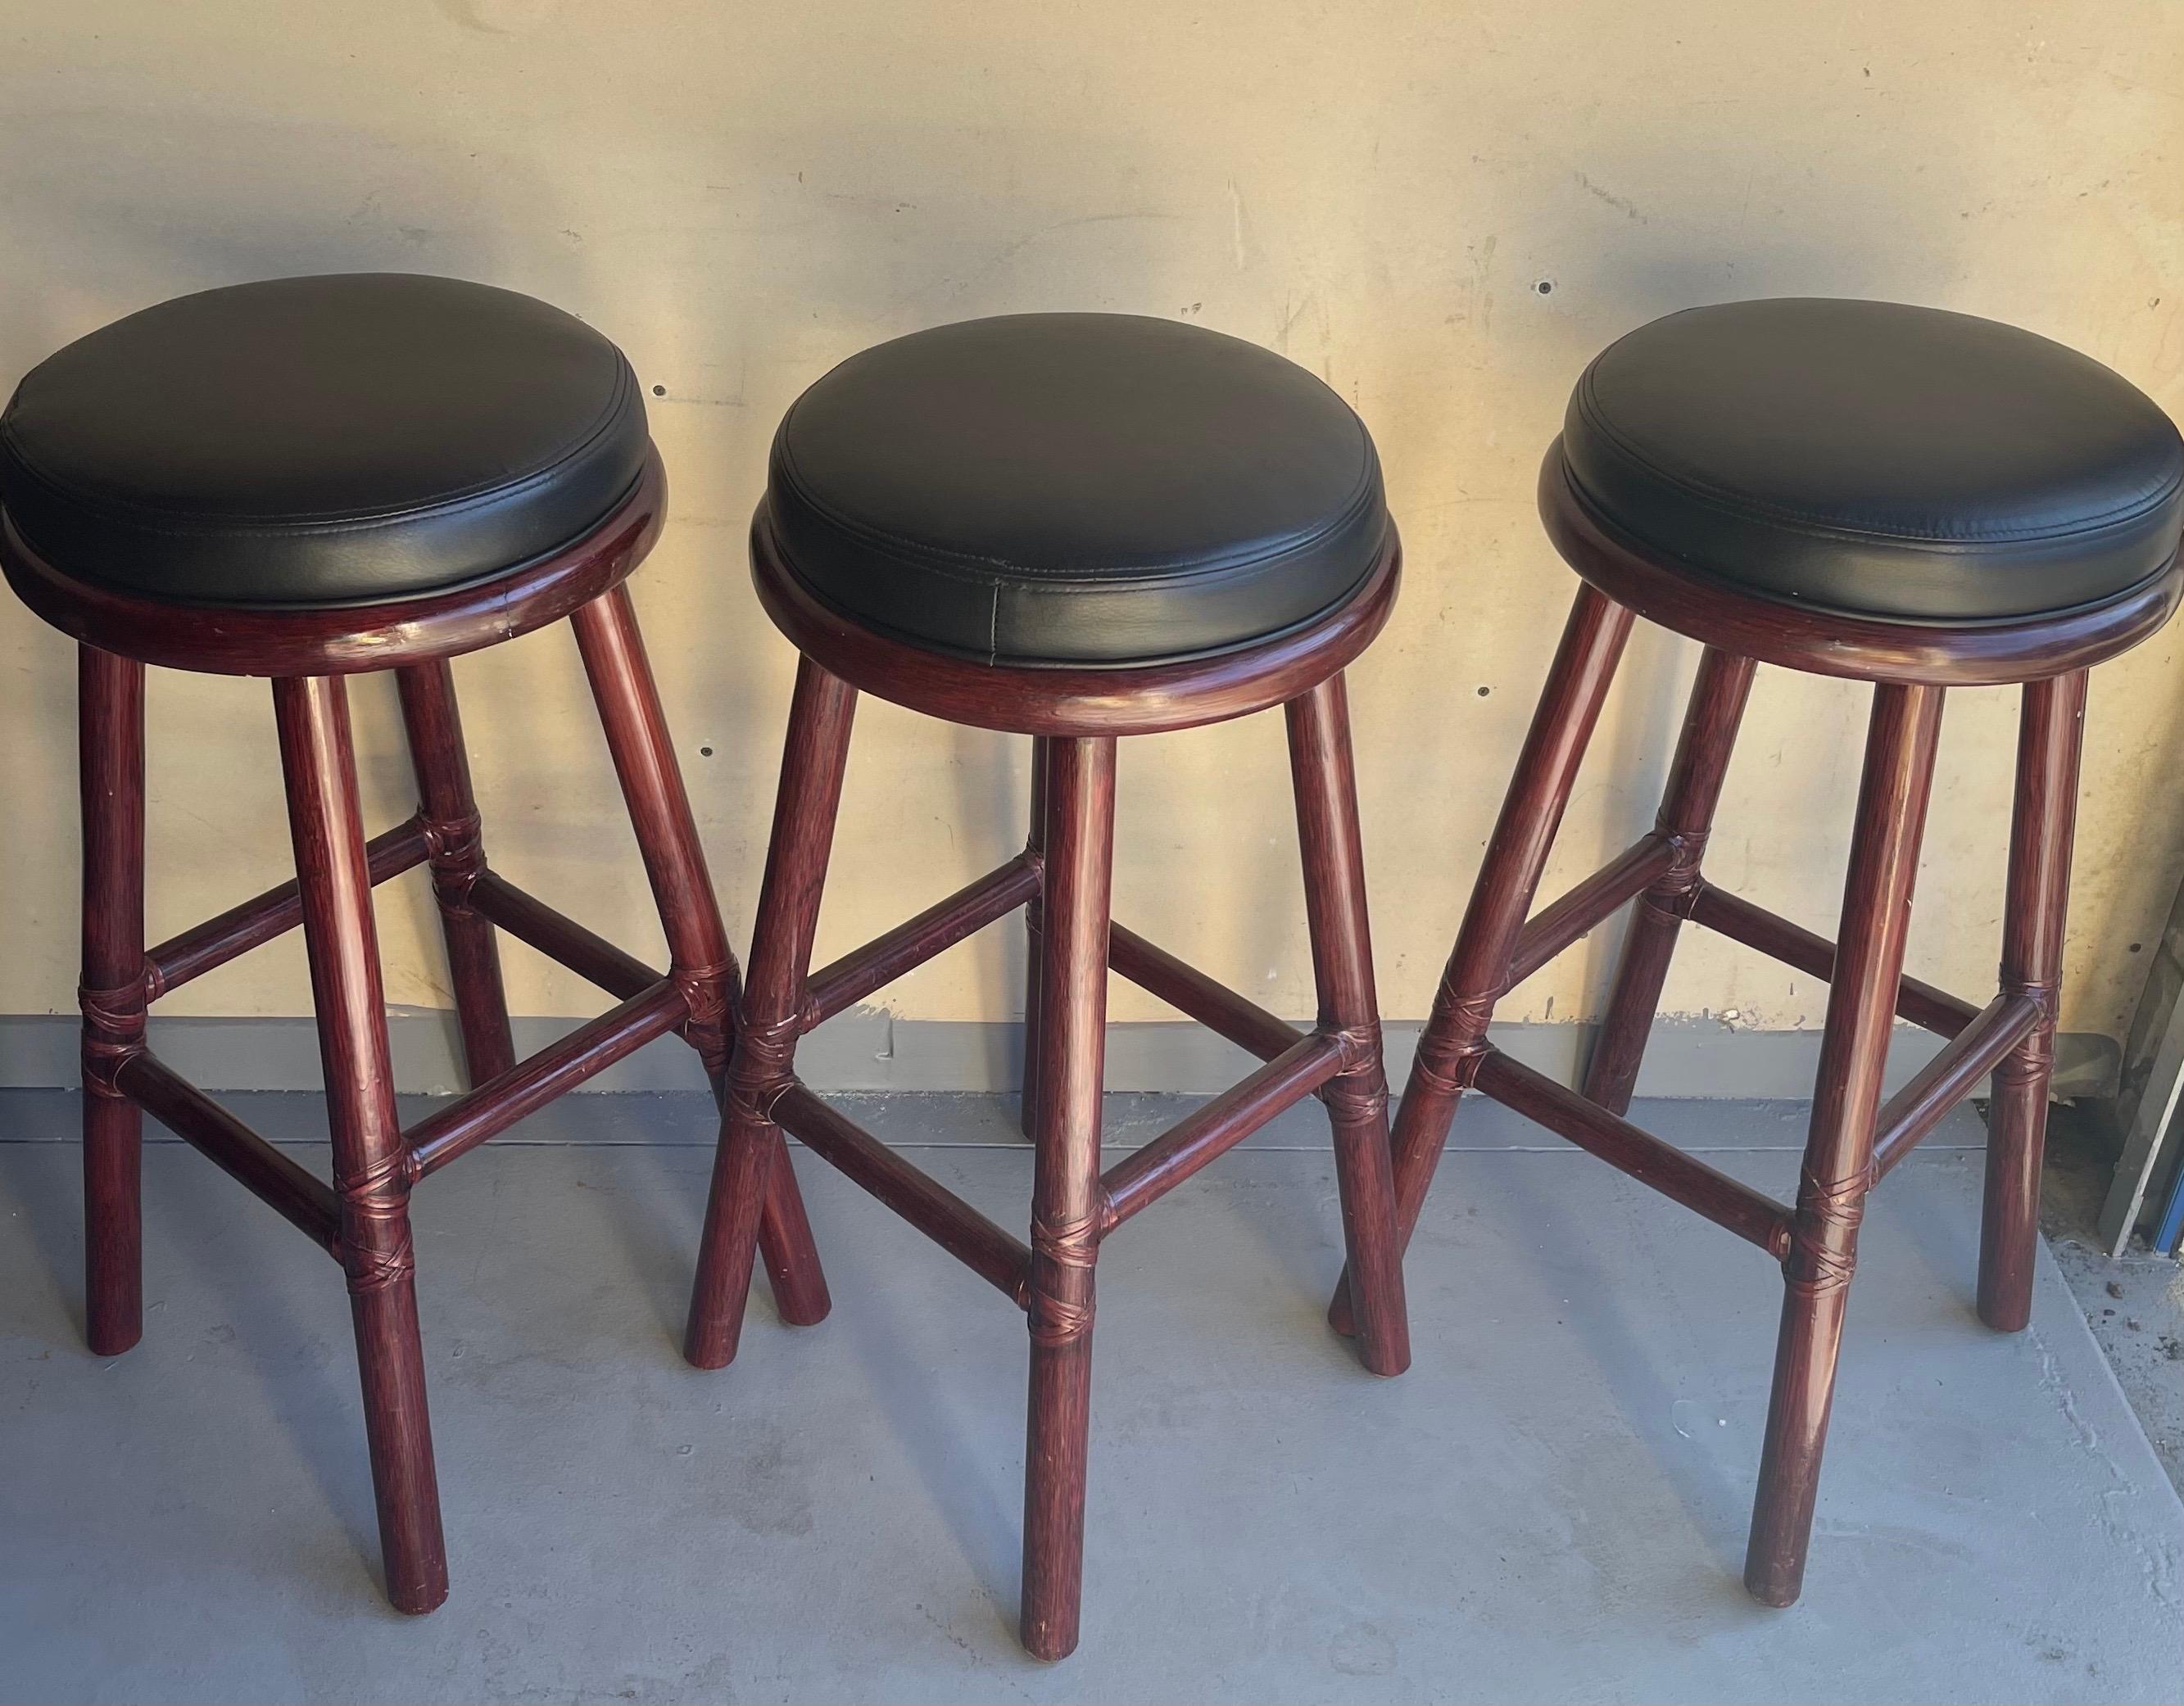 mcguire bar stools